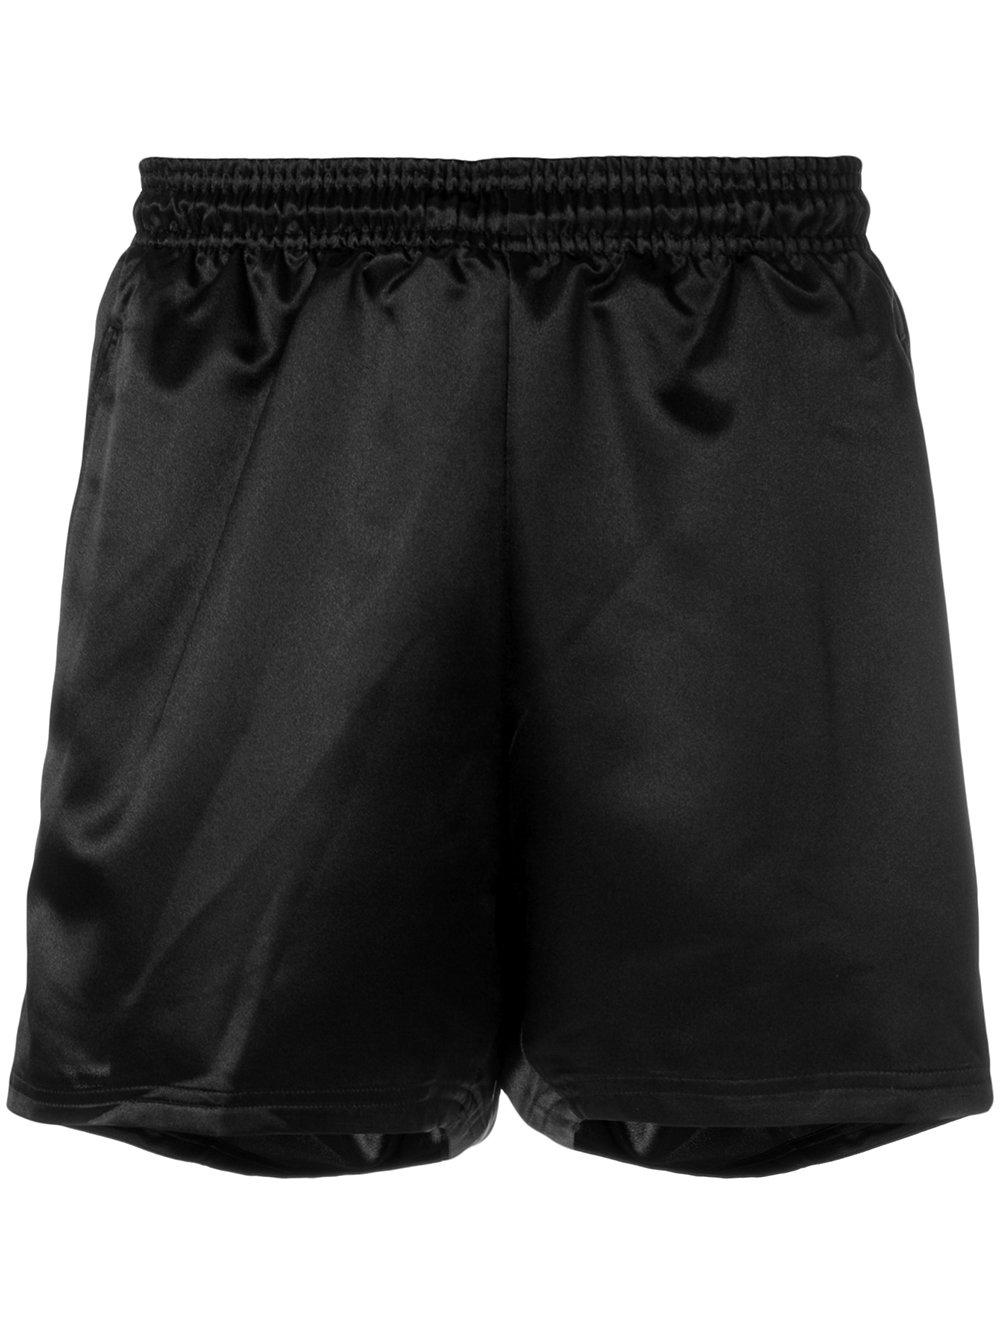 Gosha Rubchinskiy X Adidas Track Shorts - Black | LookMazing